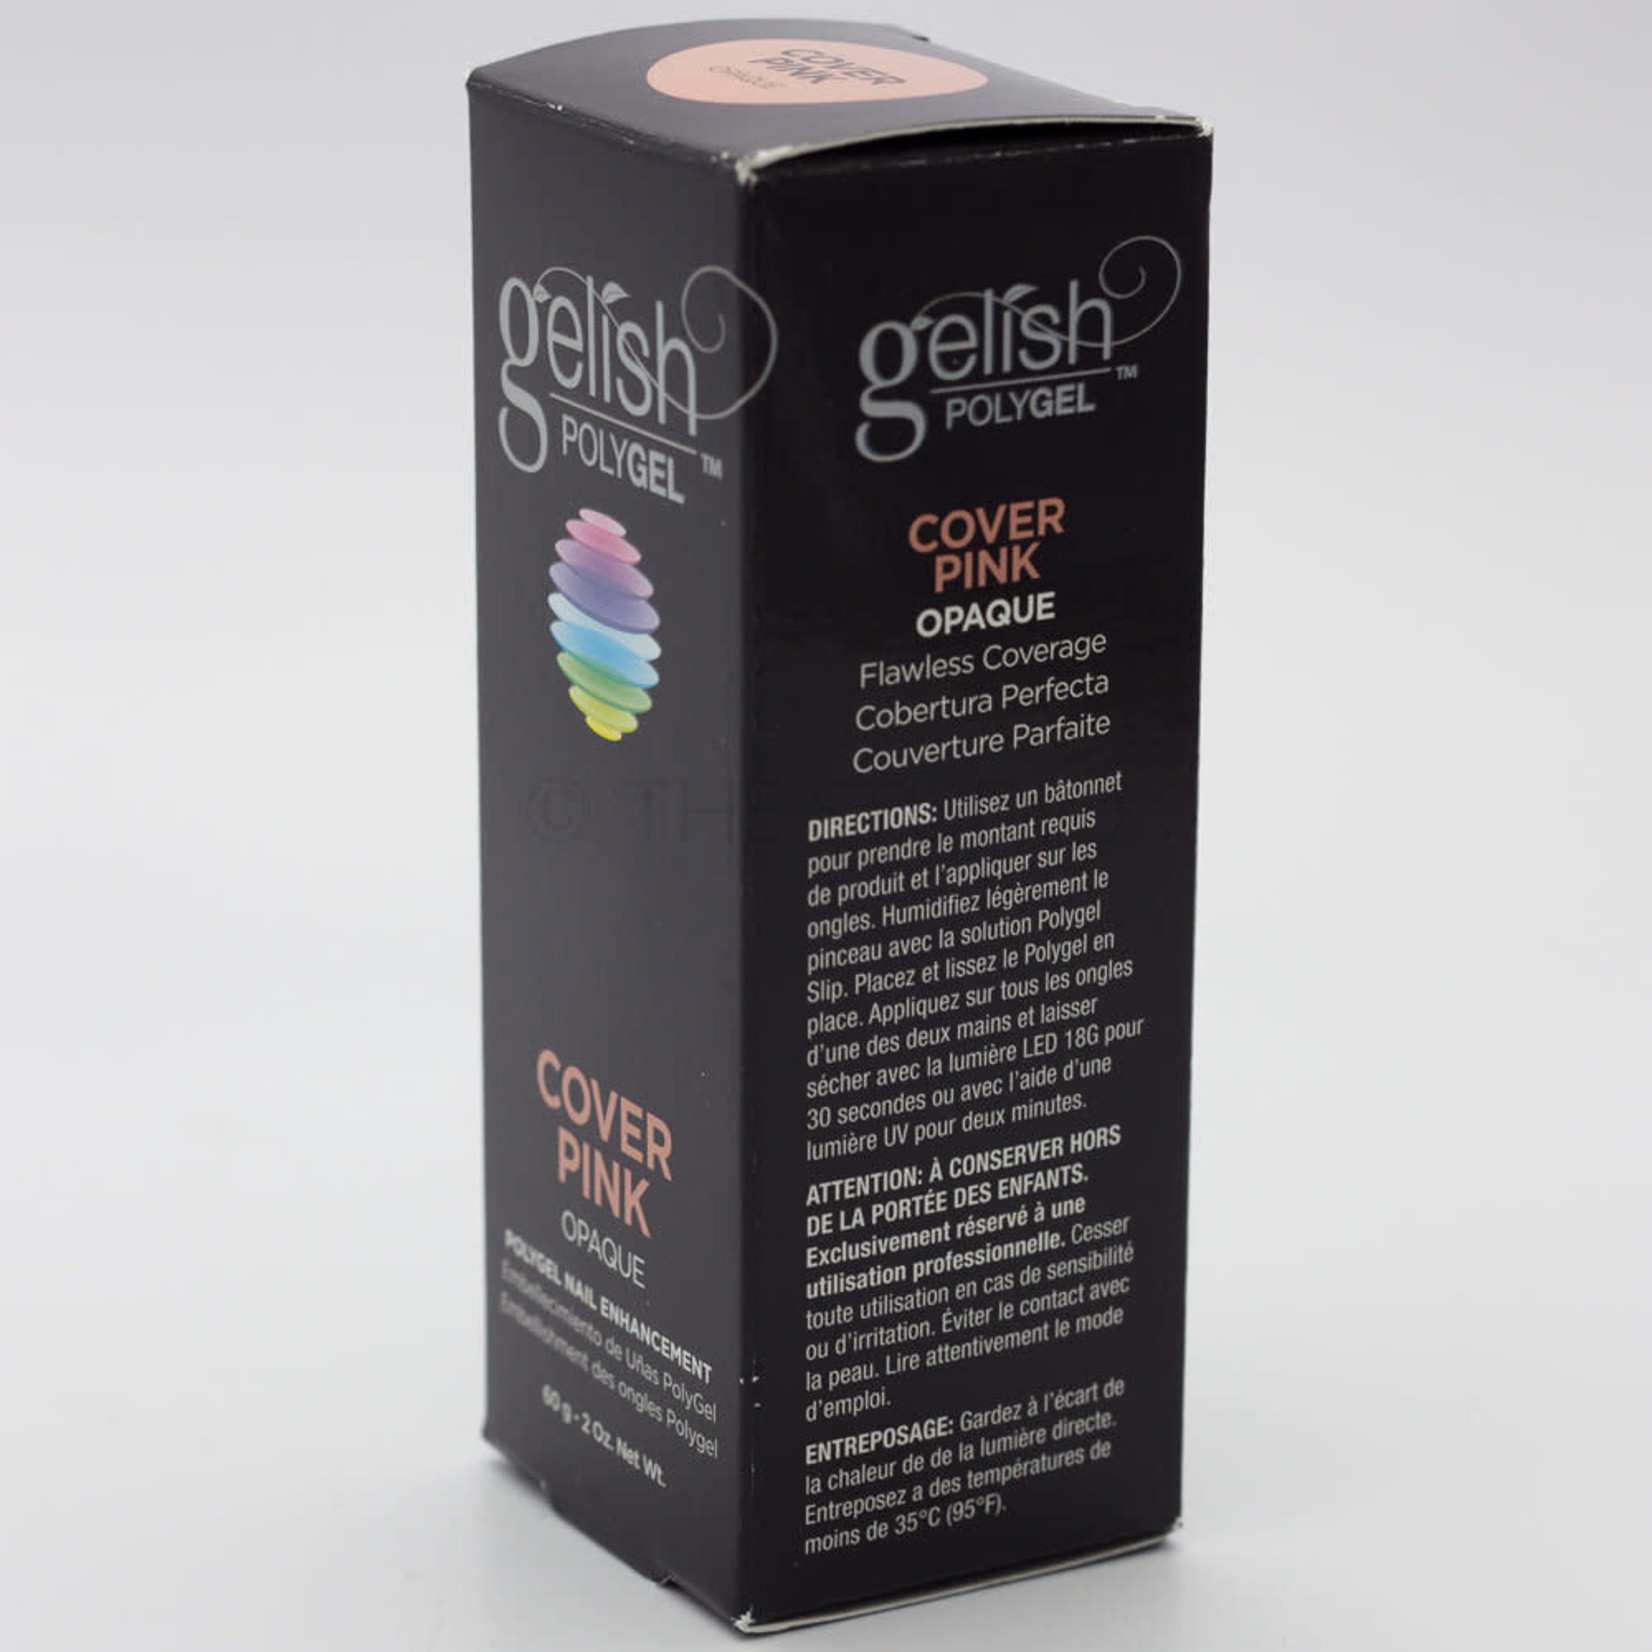 Gelish Gelish - Polygel - Cover Pink